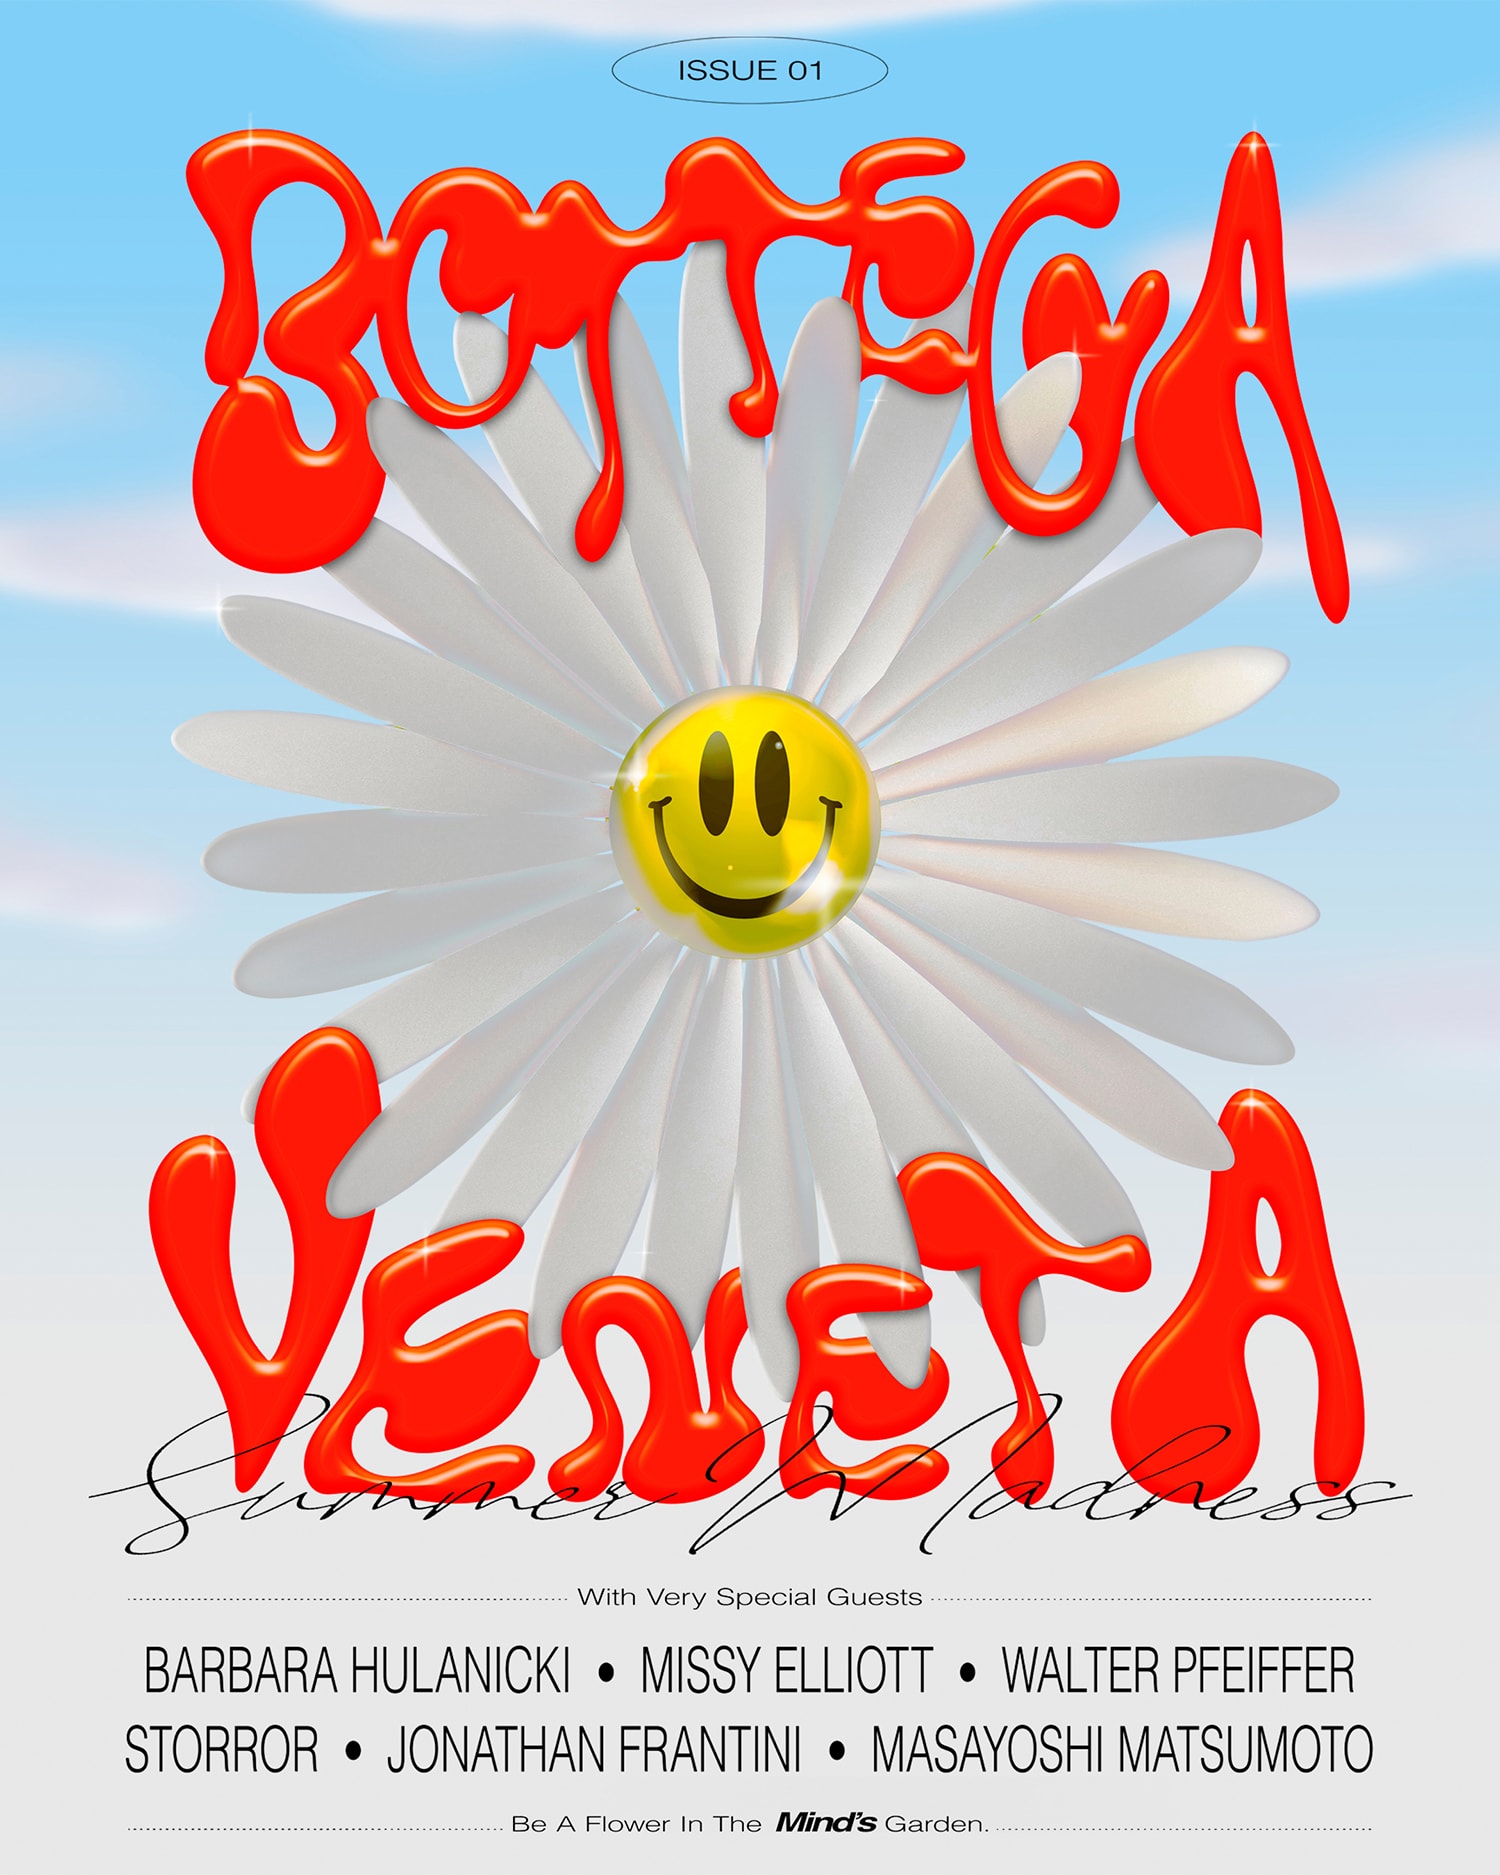 Bottega Veneta 正式推出季度線上刊物「ISSUE 01」